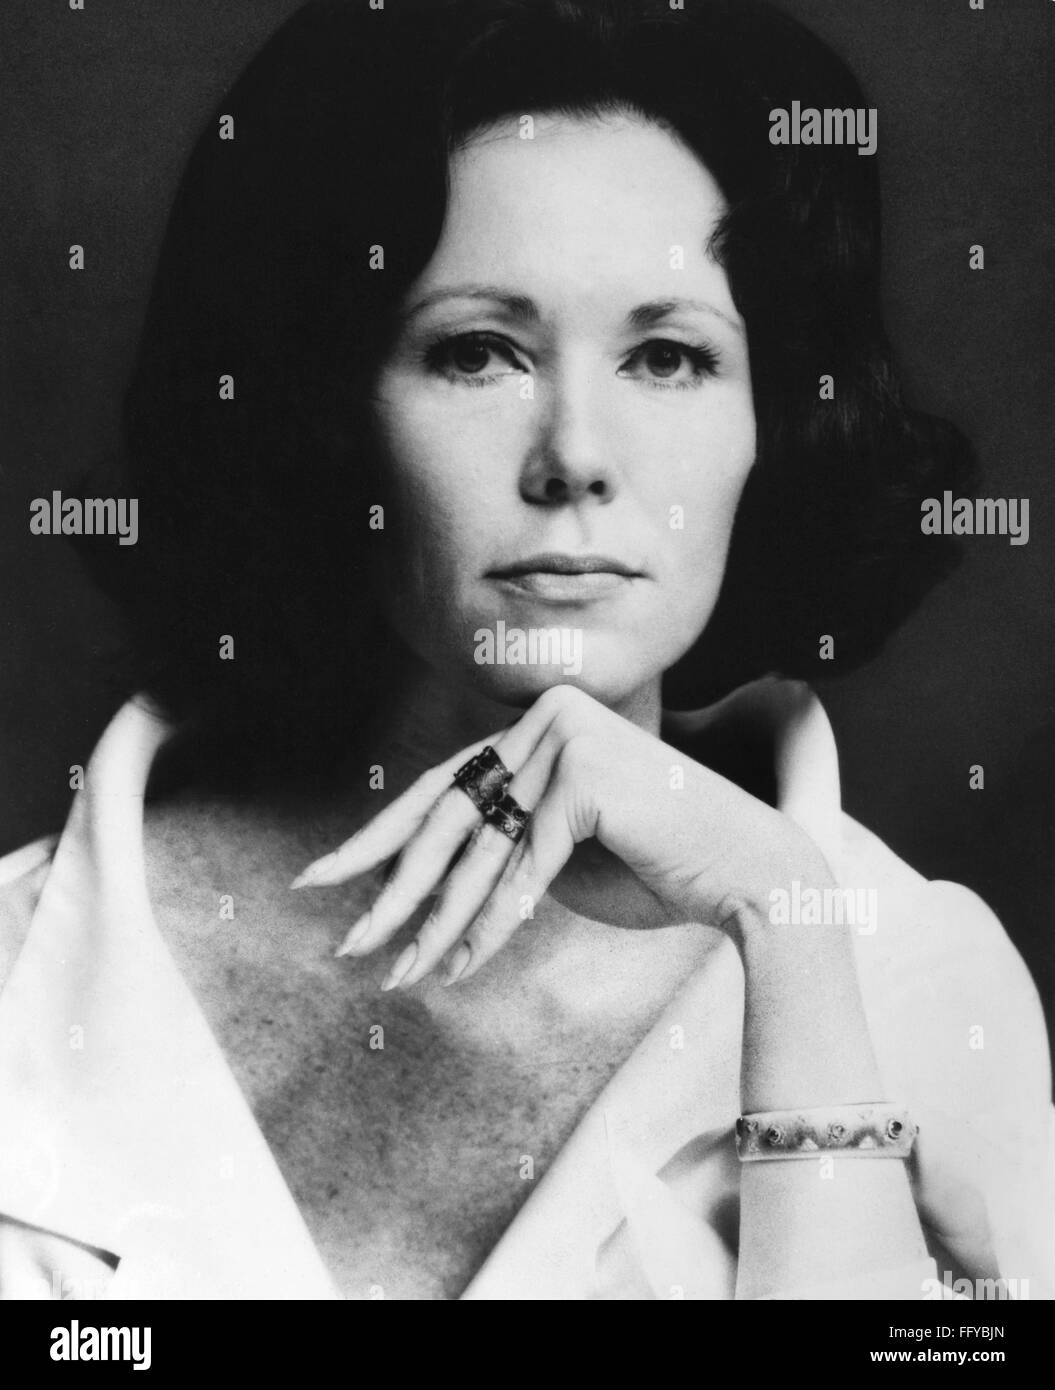 NANCY FREITAG (1933-). /nAmerican Autor und Journalist. Fotografie, 1973. Stockfoto